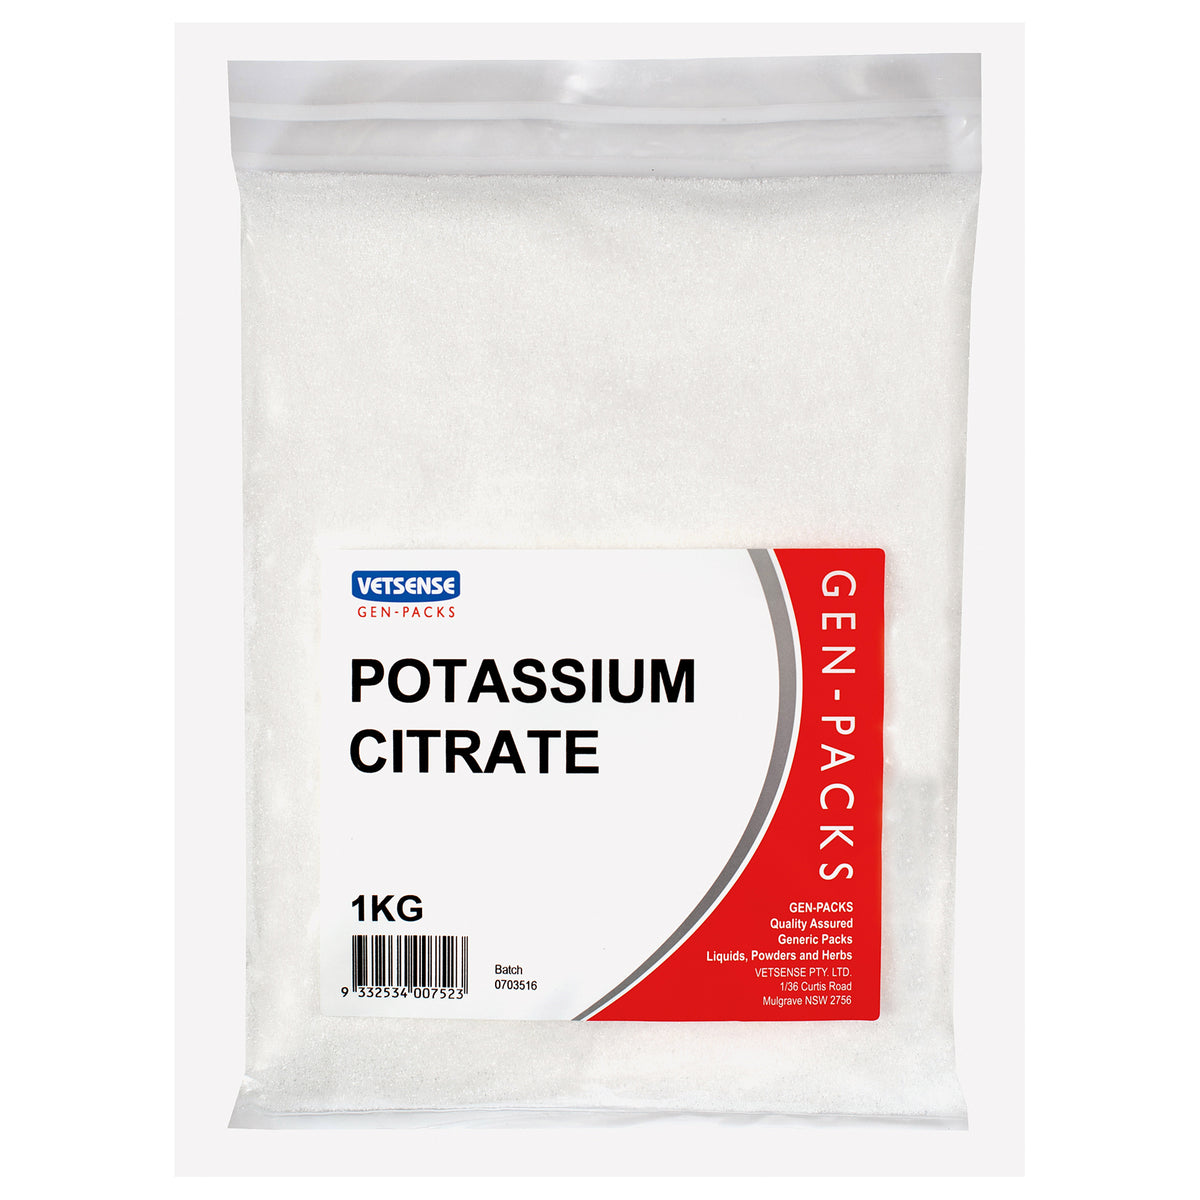 Vetsense Gen Packs Potassium Citrate